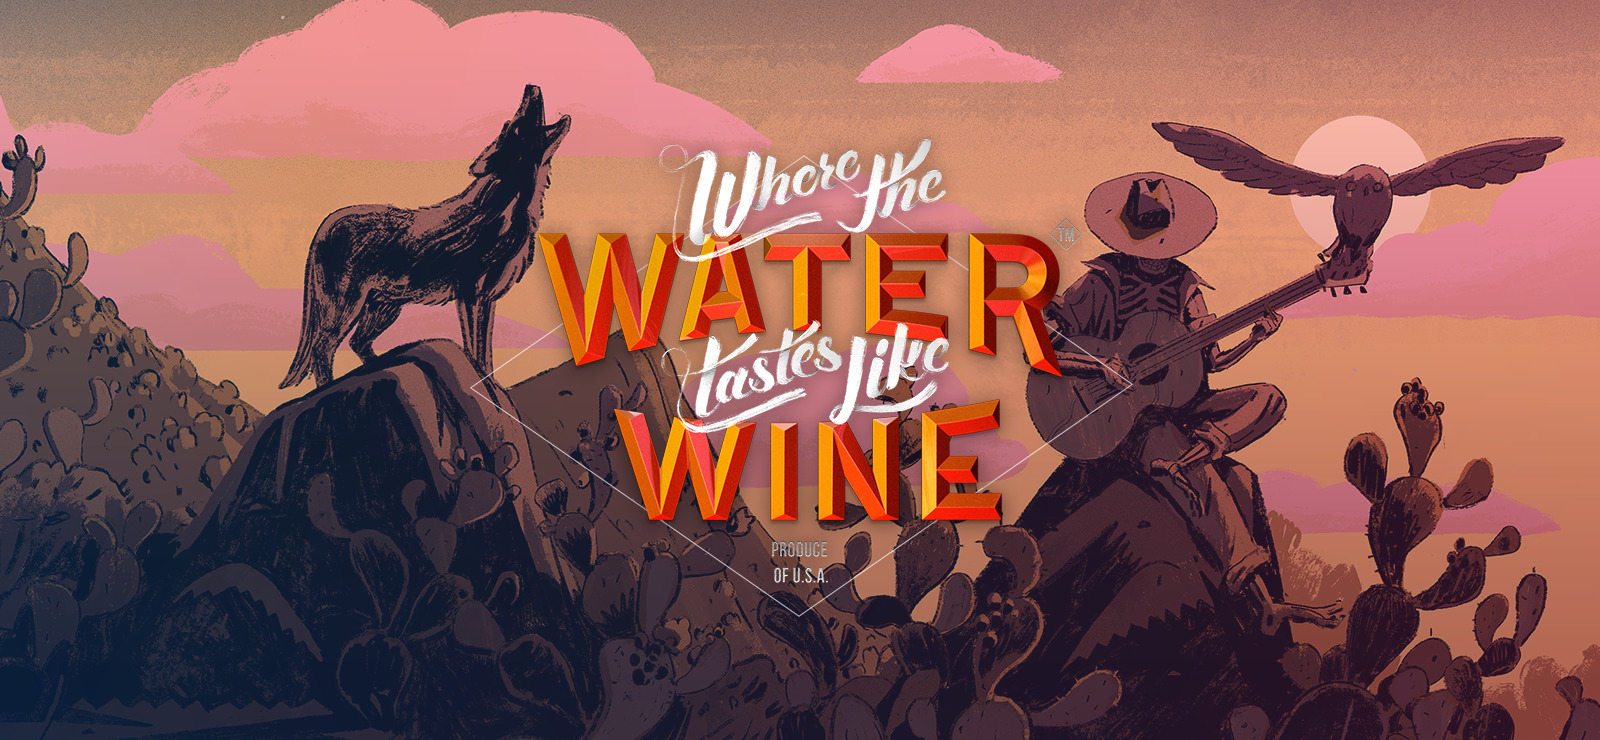 Water like wine. Where the Water tastes like Wine. Where the Water tastes игра. There the Water taste like Wine. Where the Water tastes like Wine карта.